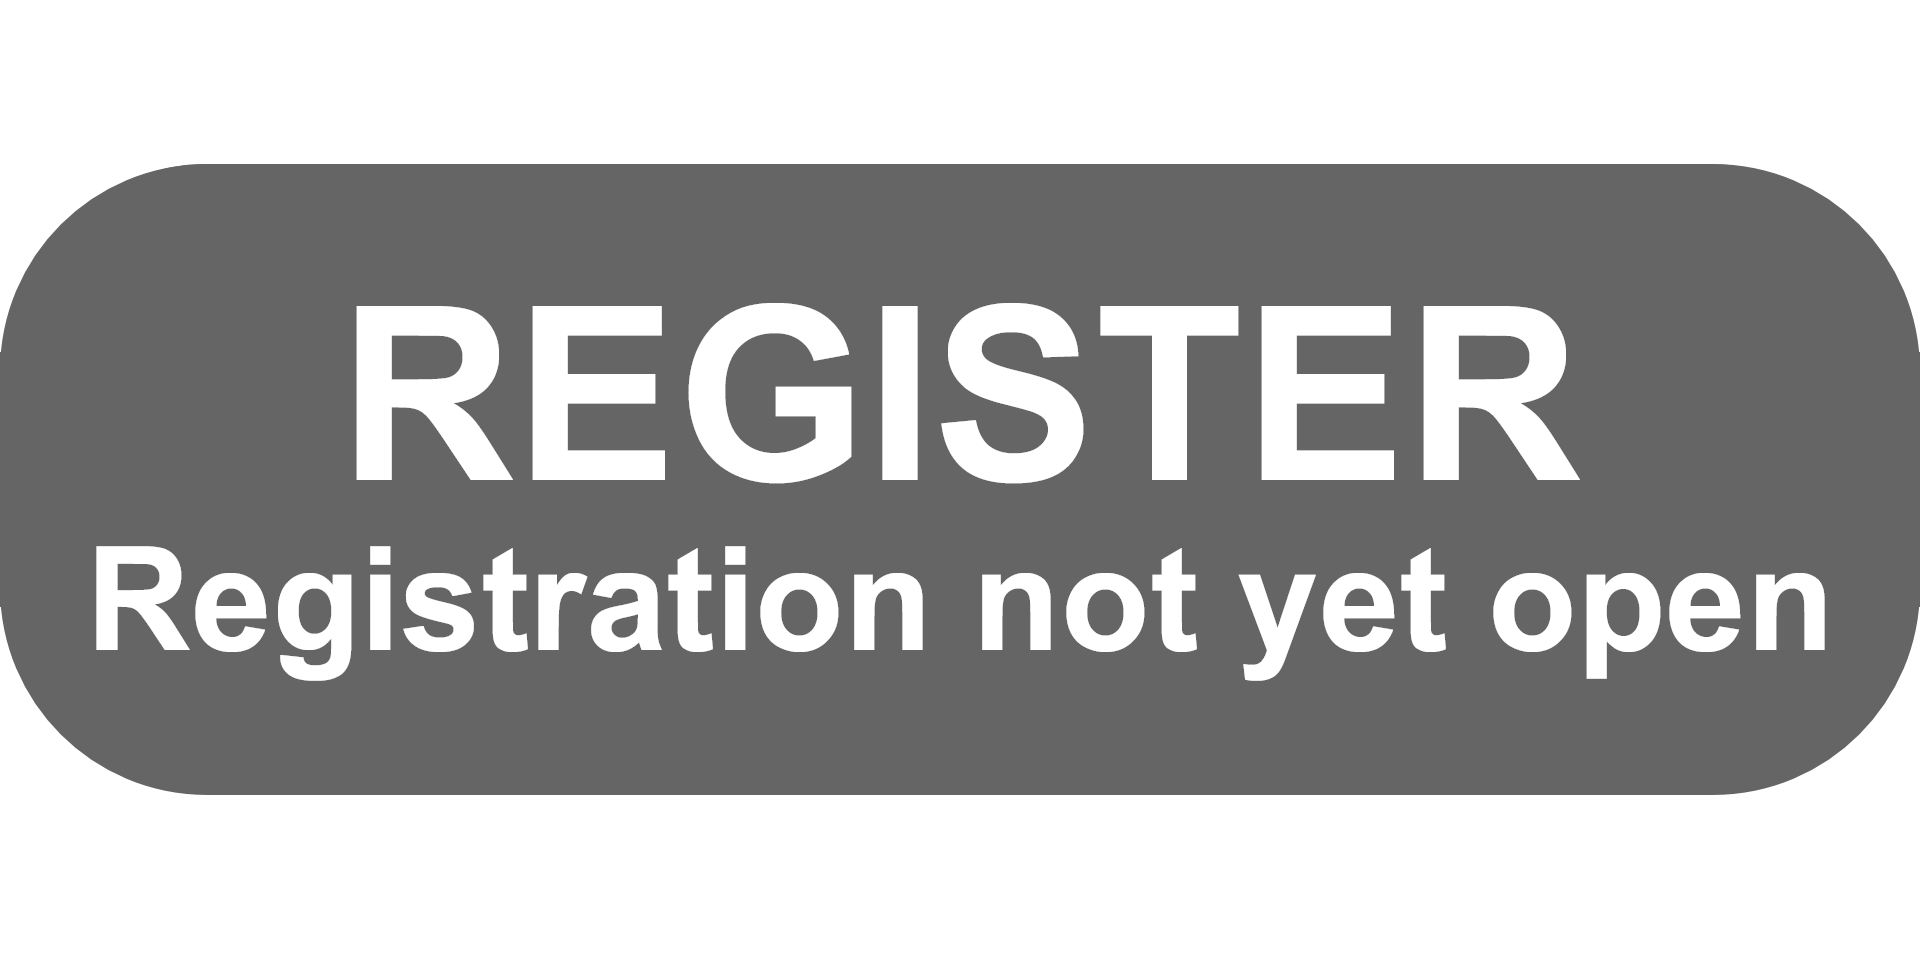 Registration is not yet open